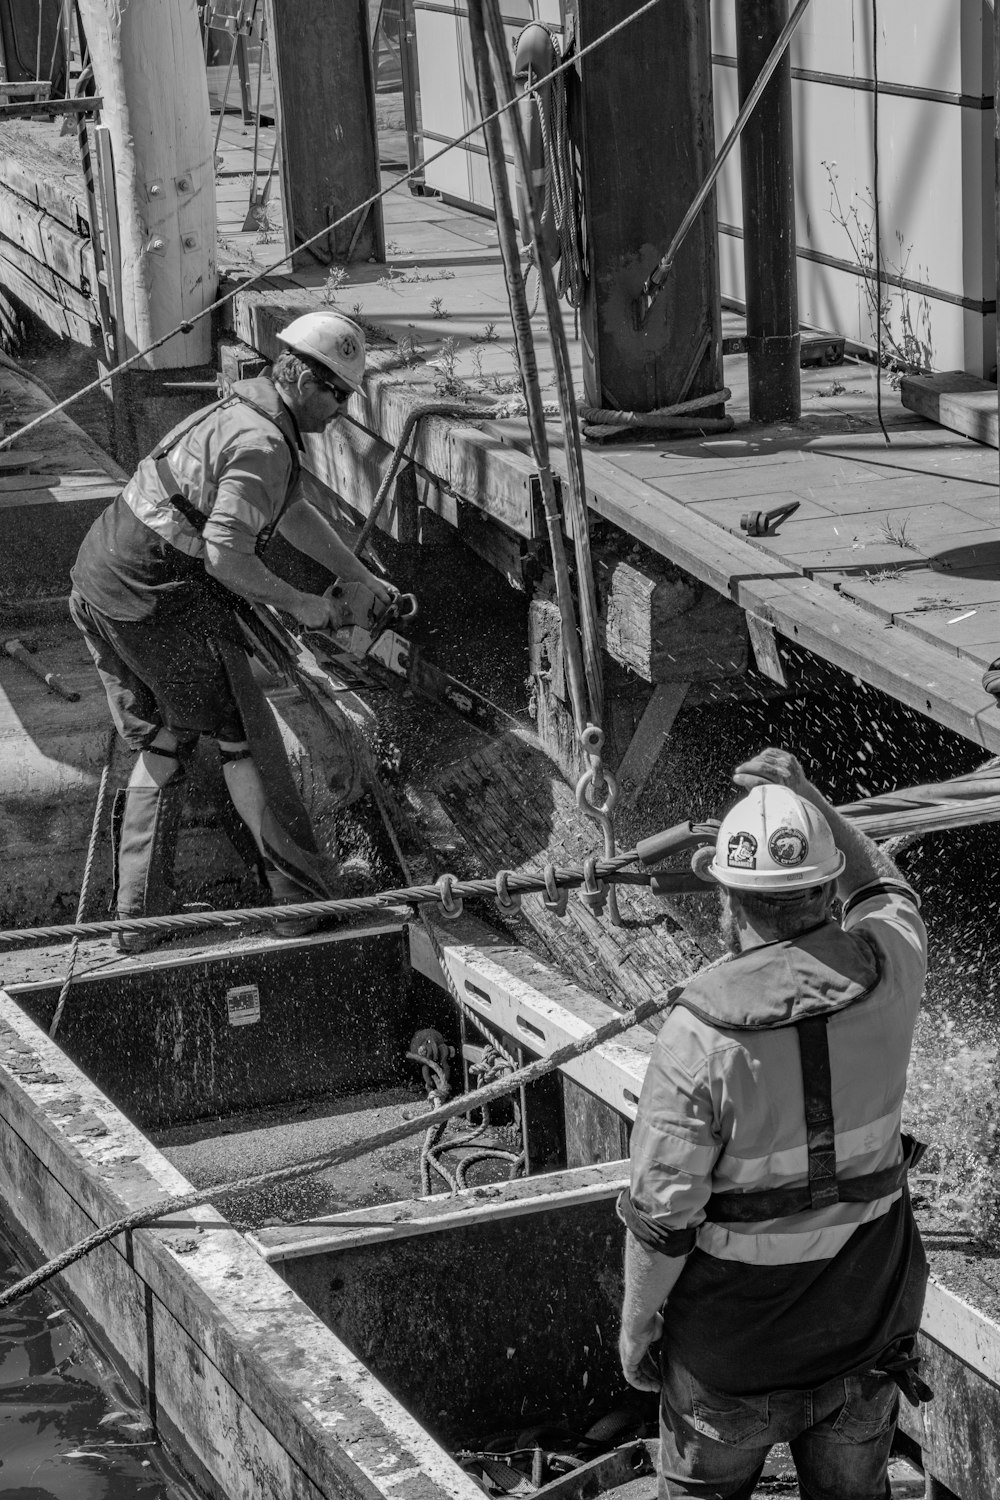 Foto in scala di grigi di una persona in sella a una barca